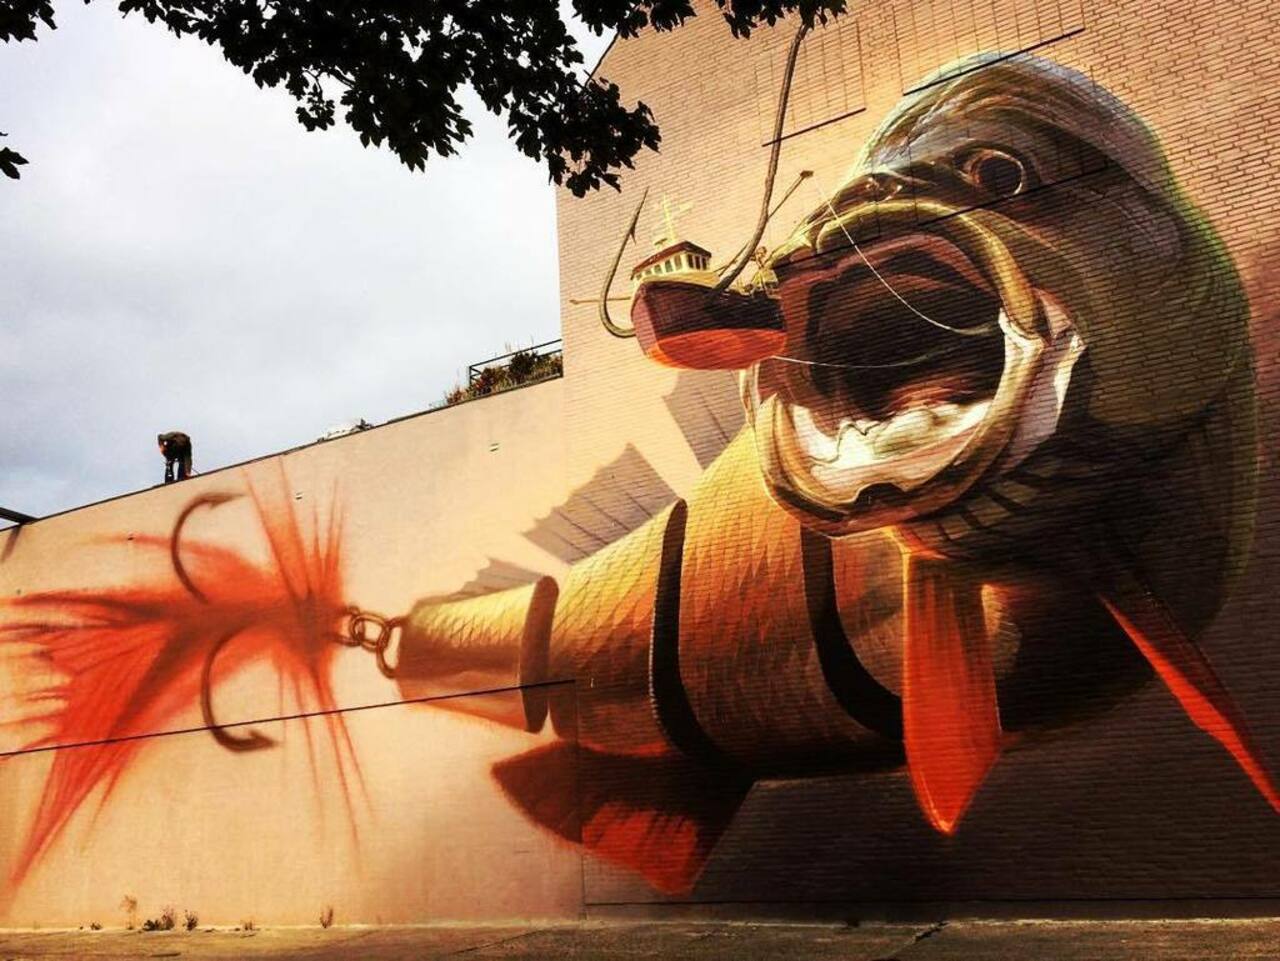 RT @artpushr: via #moving.alone "http://ift.tt/1QKKdgS" #graffiti #streetart http://t.co/5dNJlAZnwe